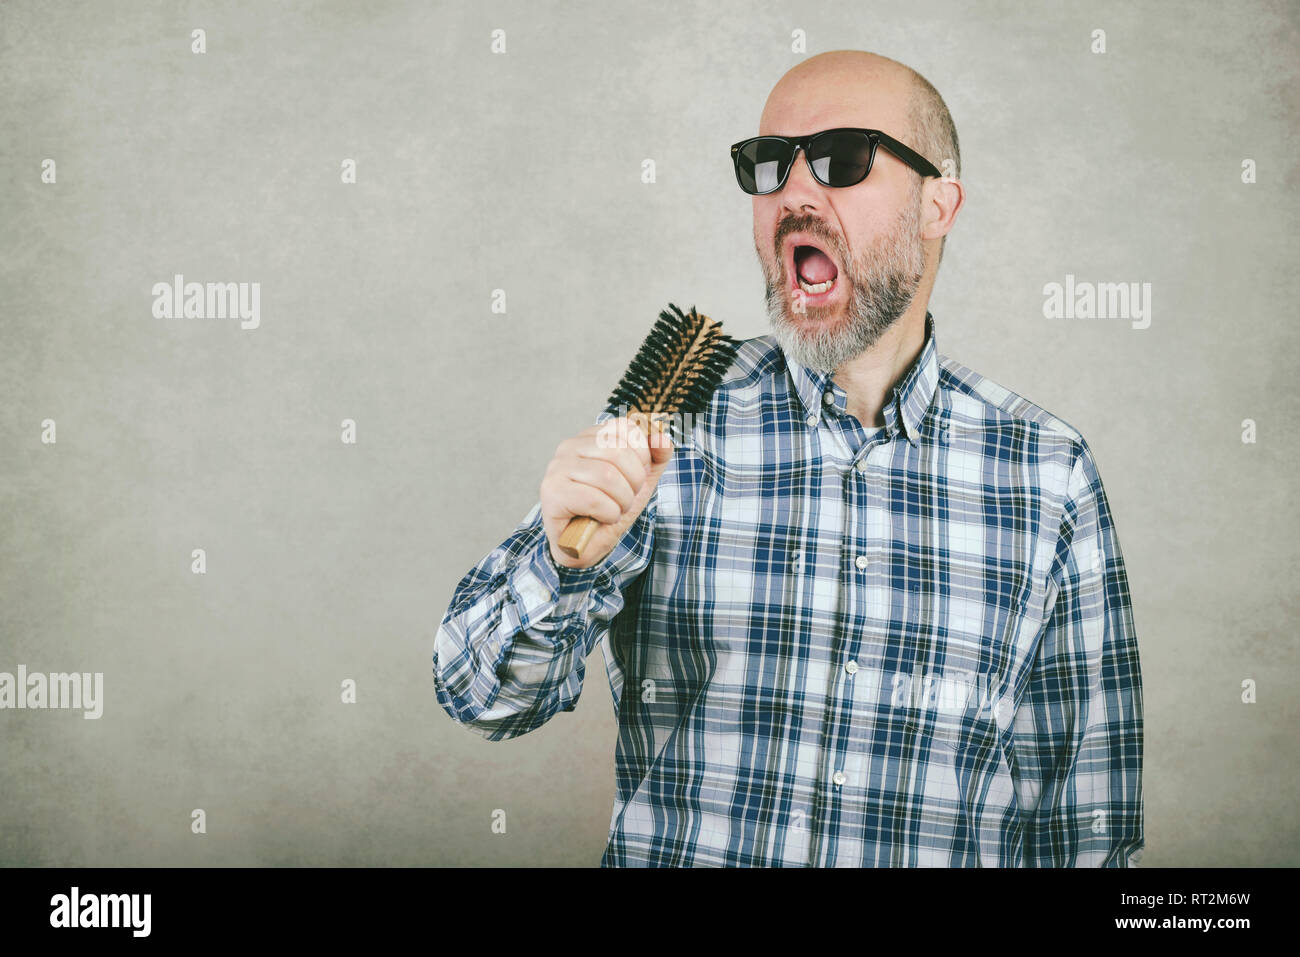 Hombre calvo con gafas de sol fotografías e imágenes de alta resolución -  Alamy